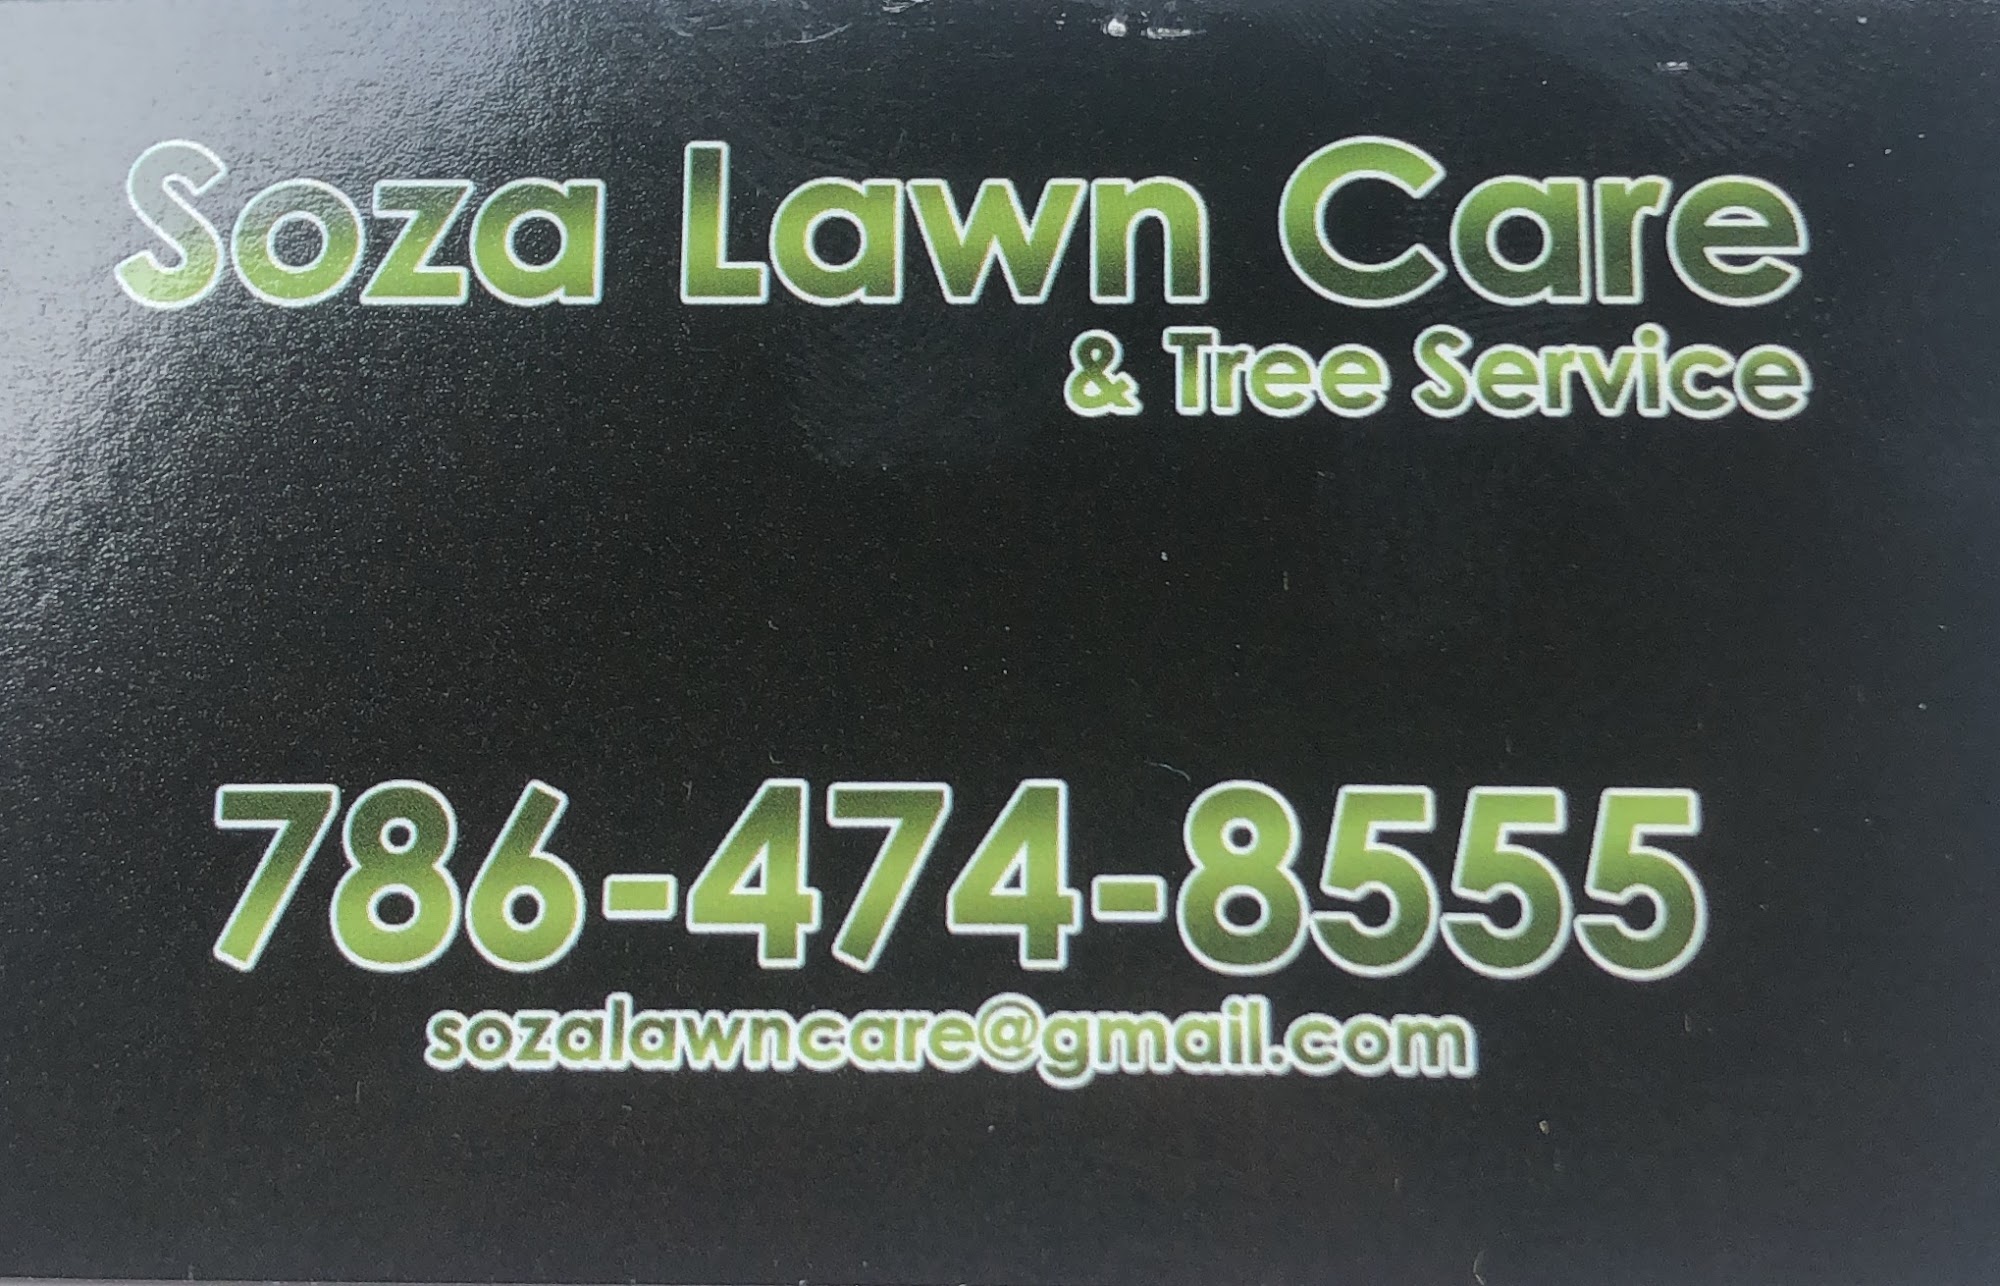 Soza Lawn Care, LLC & tree service